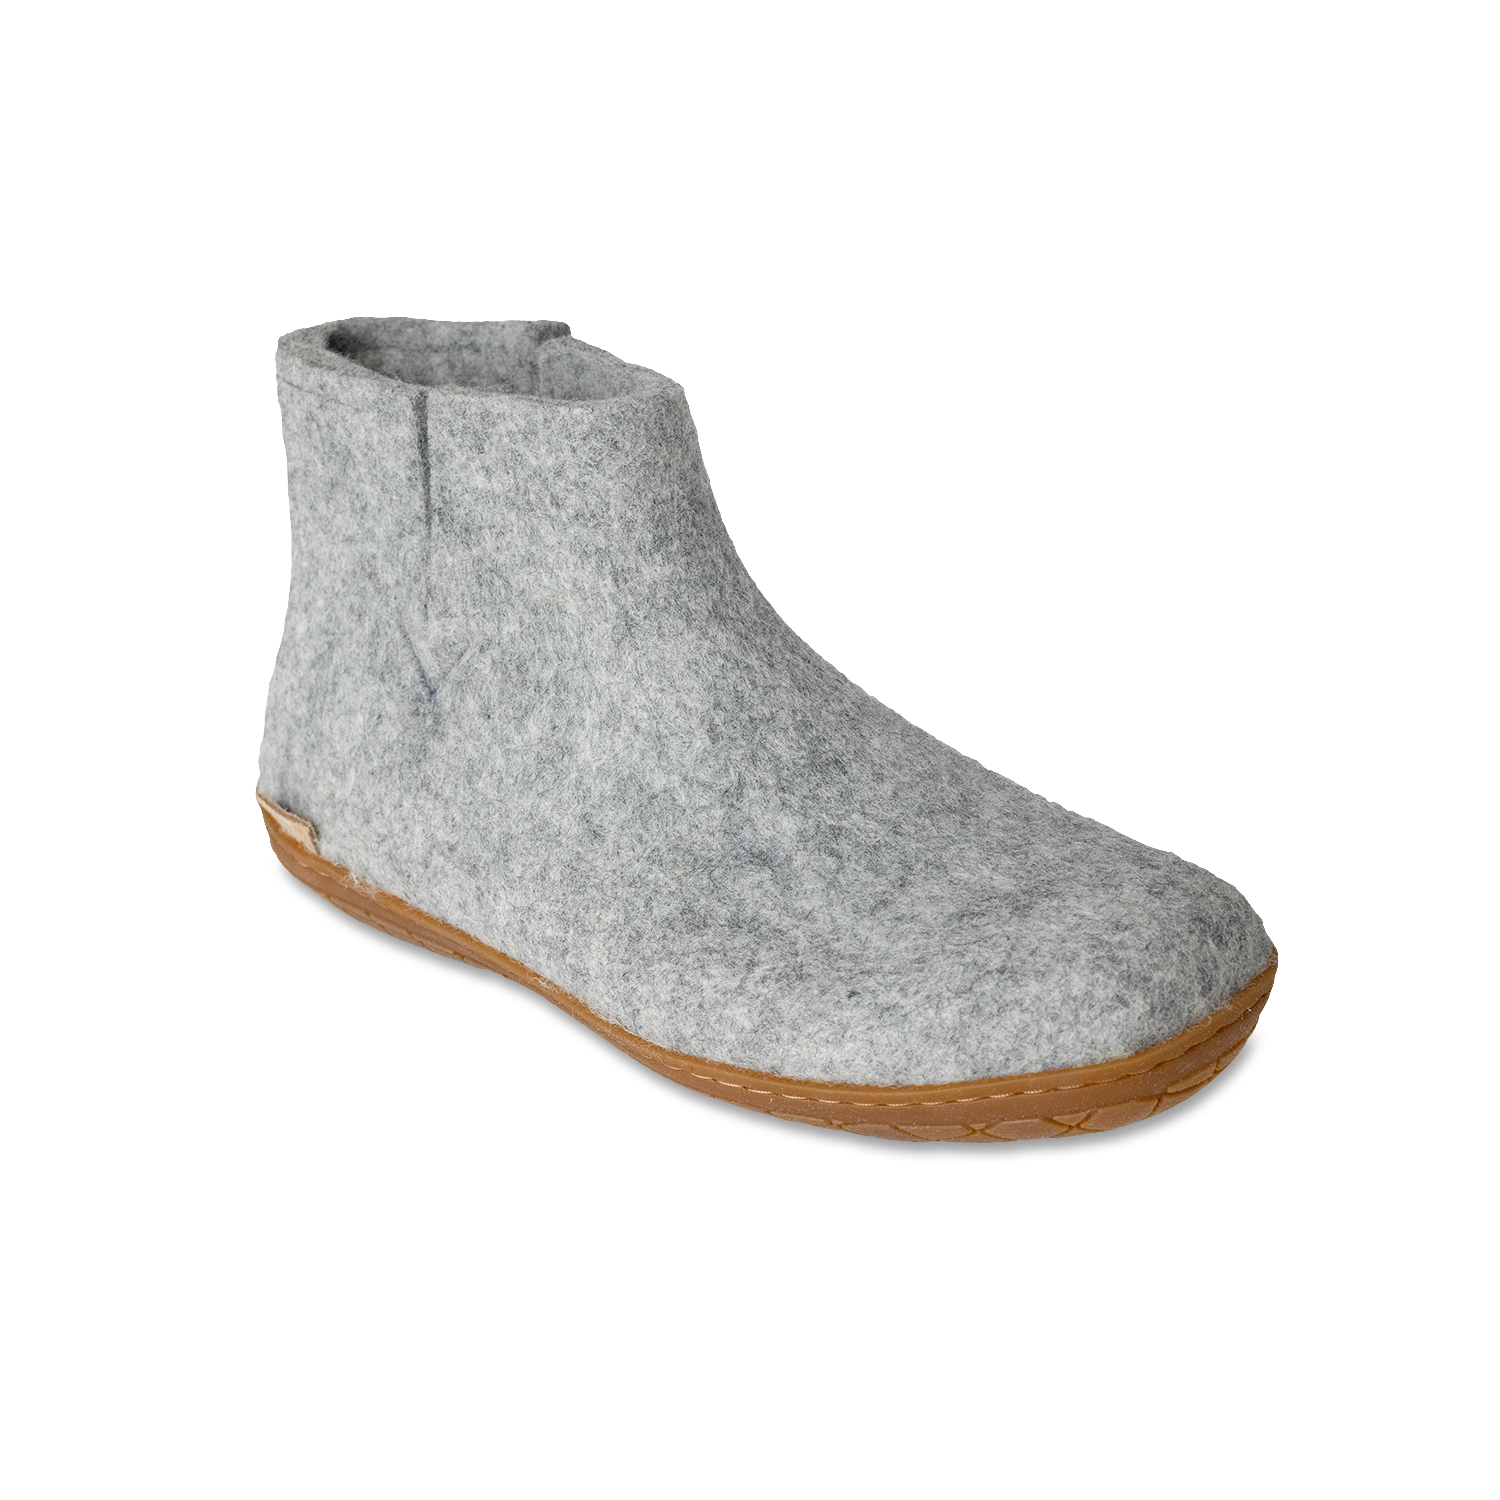 Glerups Boot Rubber Grey